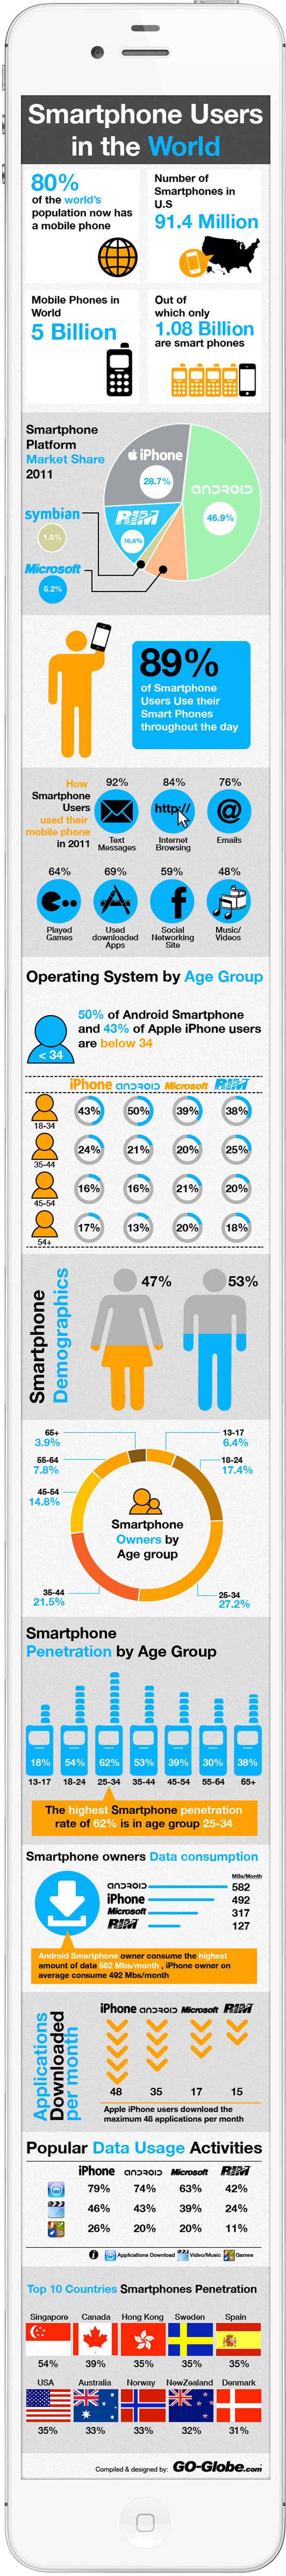 Smartphone Usage Statistics 2012 Infographic